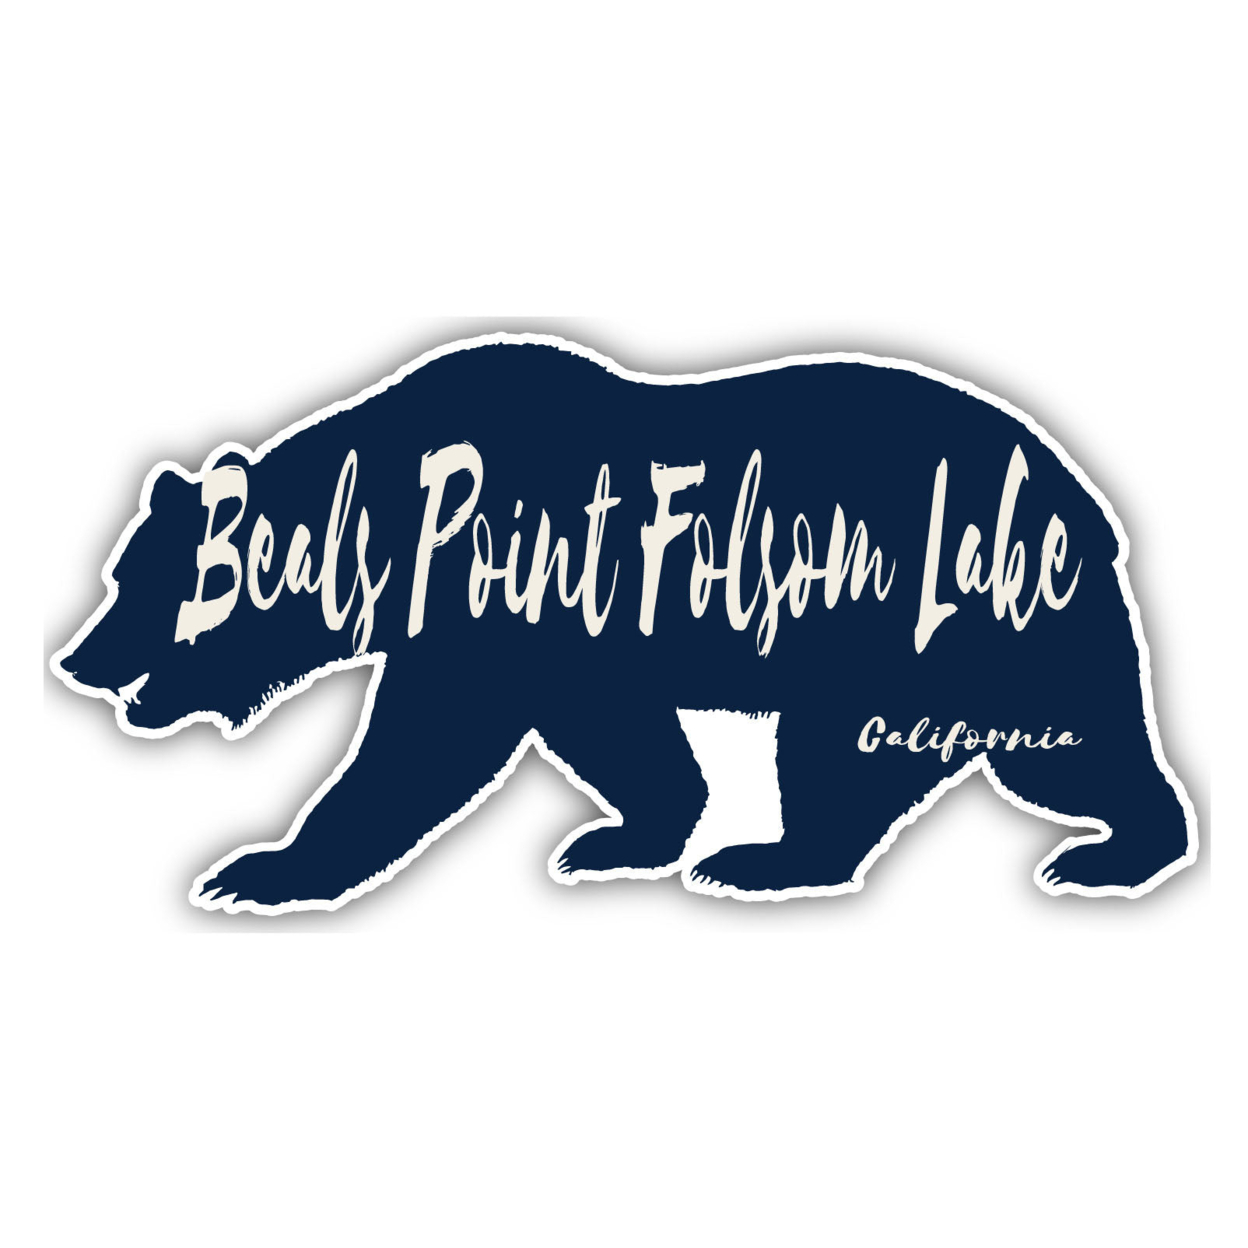 Beals Point Folsom Lake California Souvenir Decorative Stickers (Choose Theme And Size) - Single Unit, 6-Inch, Tent